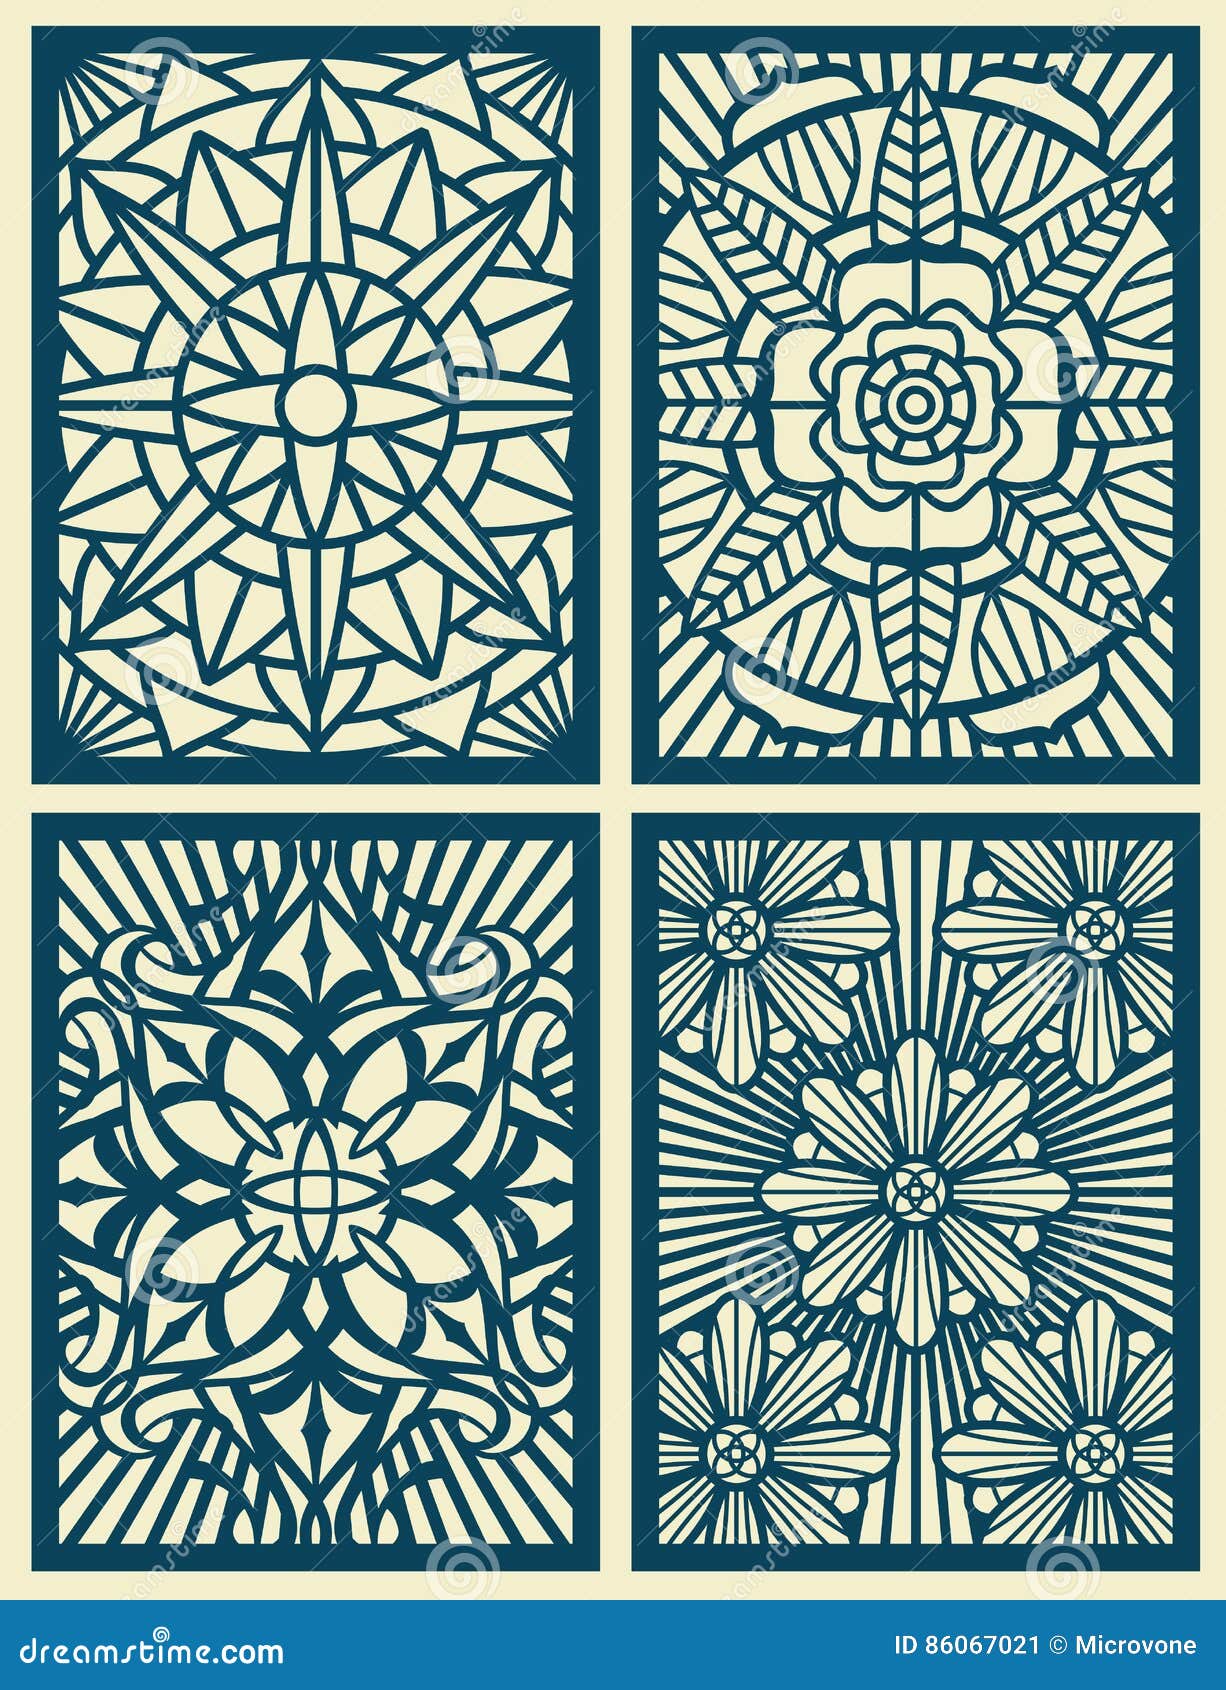 laser cut fretwork  pattern cards, panels